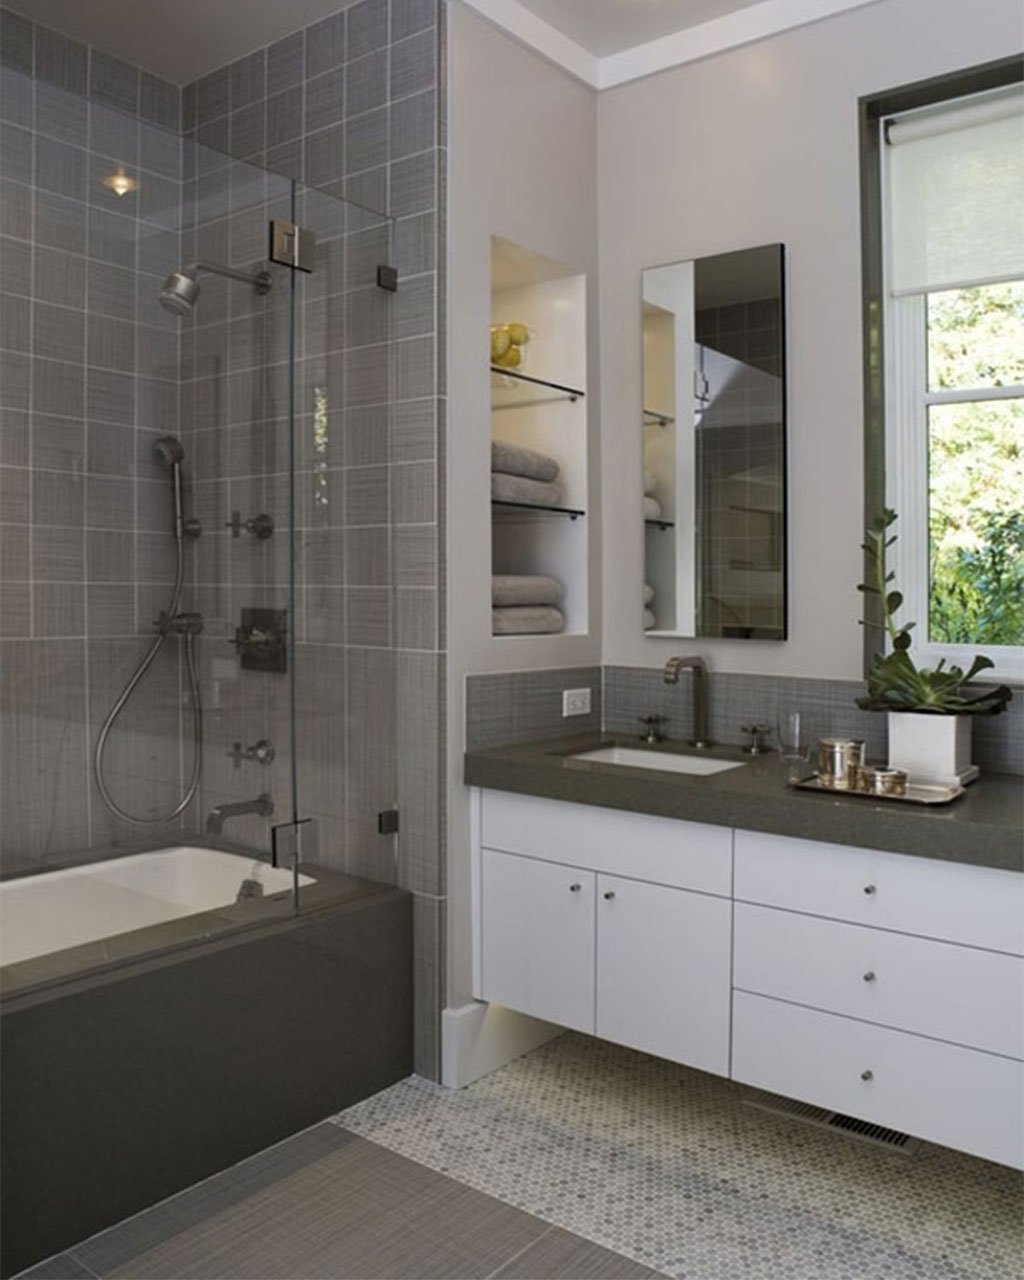 10 Beautiful Bathroom Remodeling Ideas On A Budget bathroom design remodeling ideas on budget decobizz 3 2022